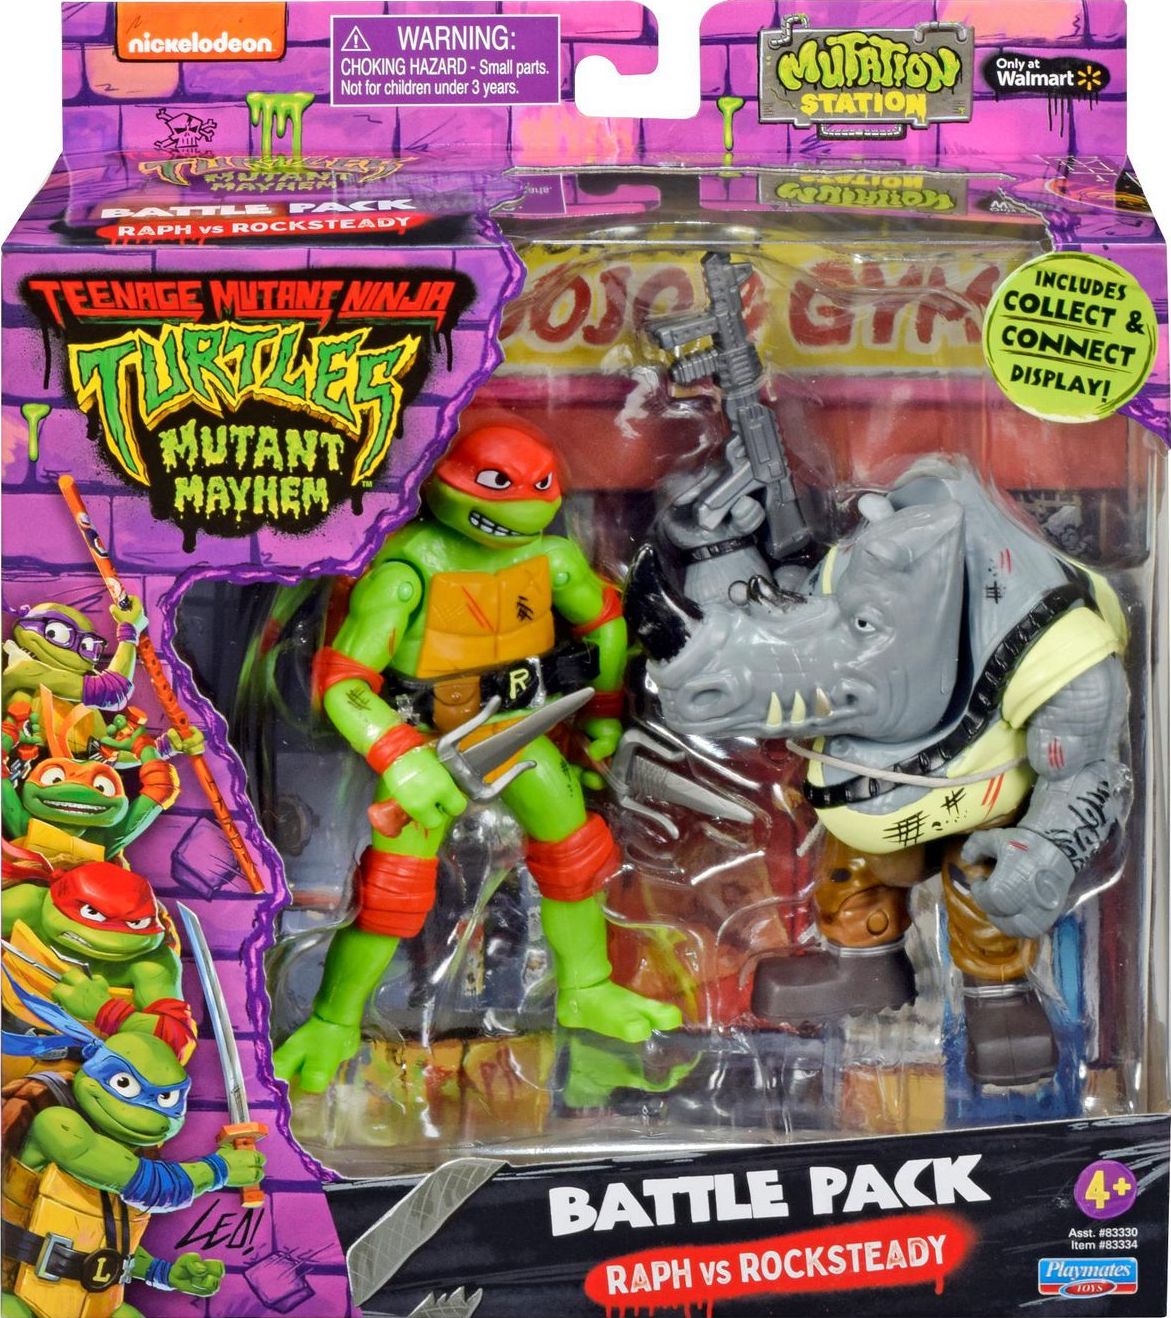 https://www.actionfigure411.com/teenage-mutant-ninja-turtles/images/raph-vs-rocksteady-battle-pack-7075.jpg